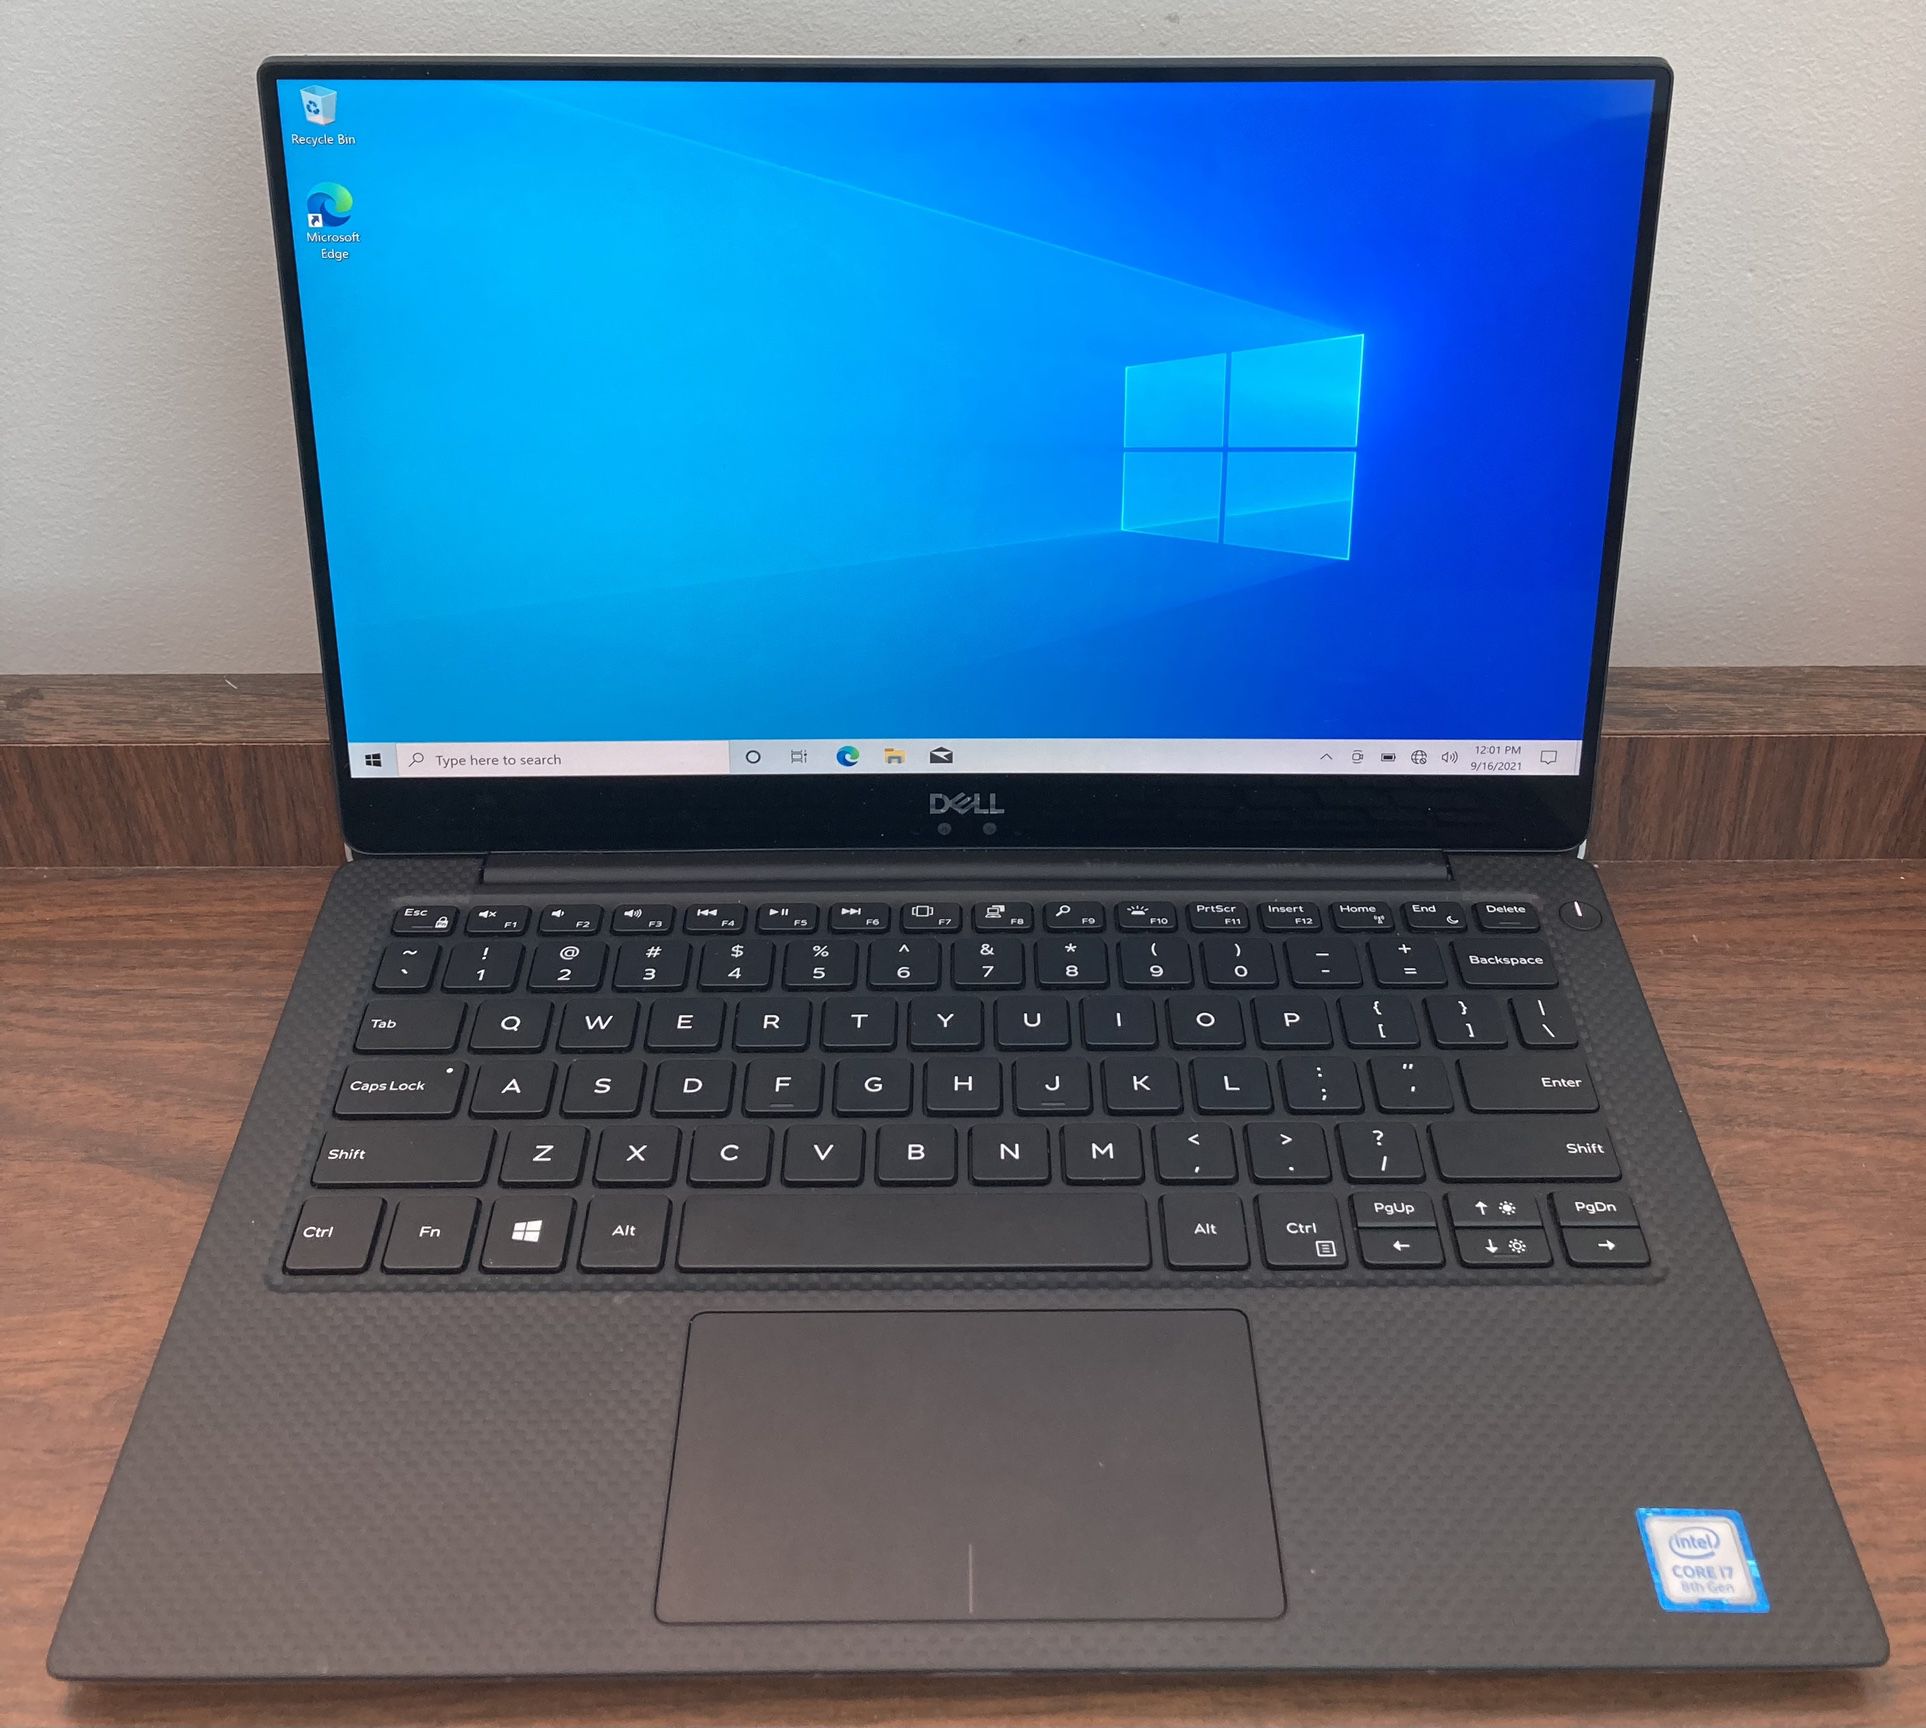 Dell XPS 13 9370 Touchscreen Laptop PC